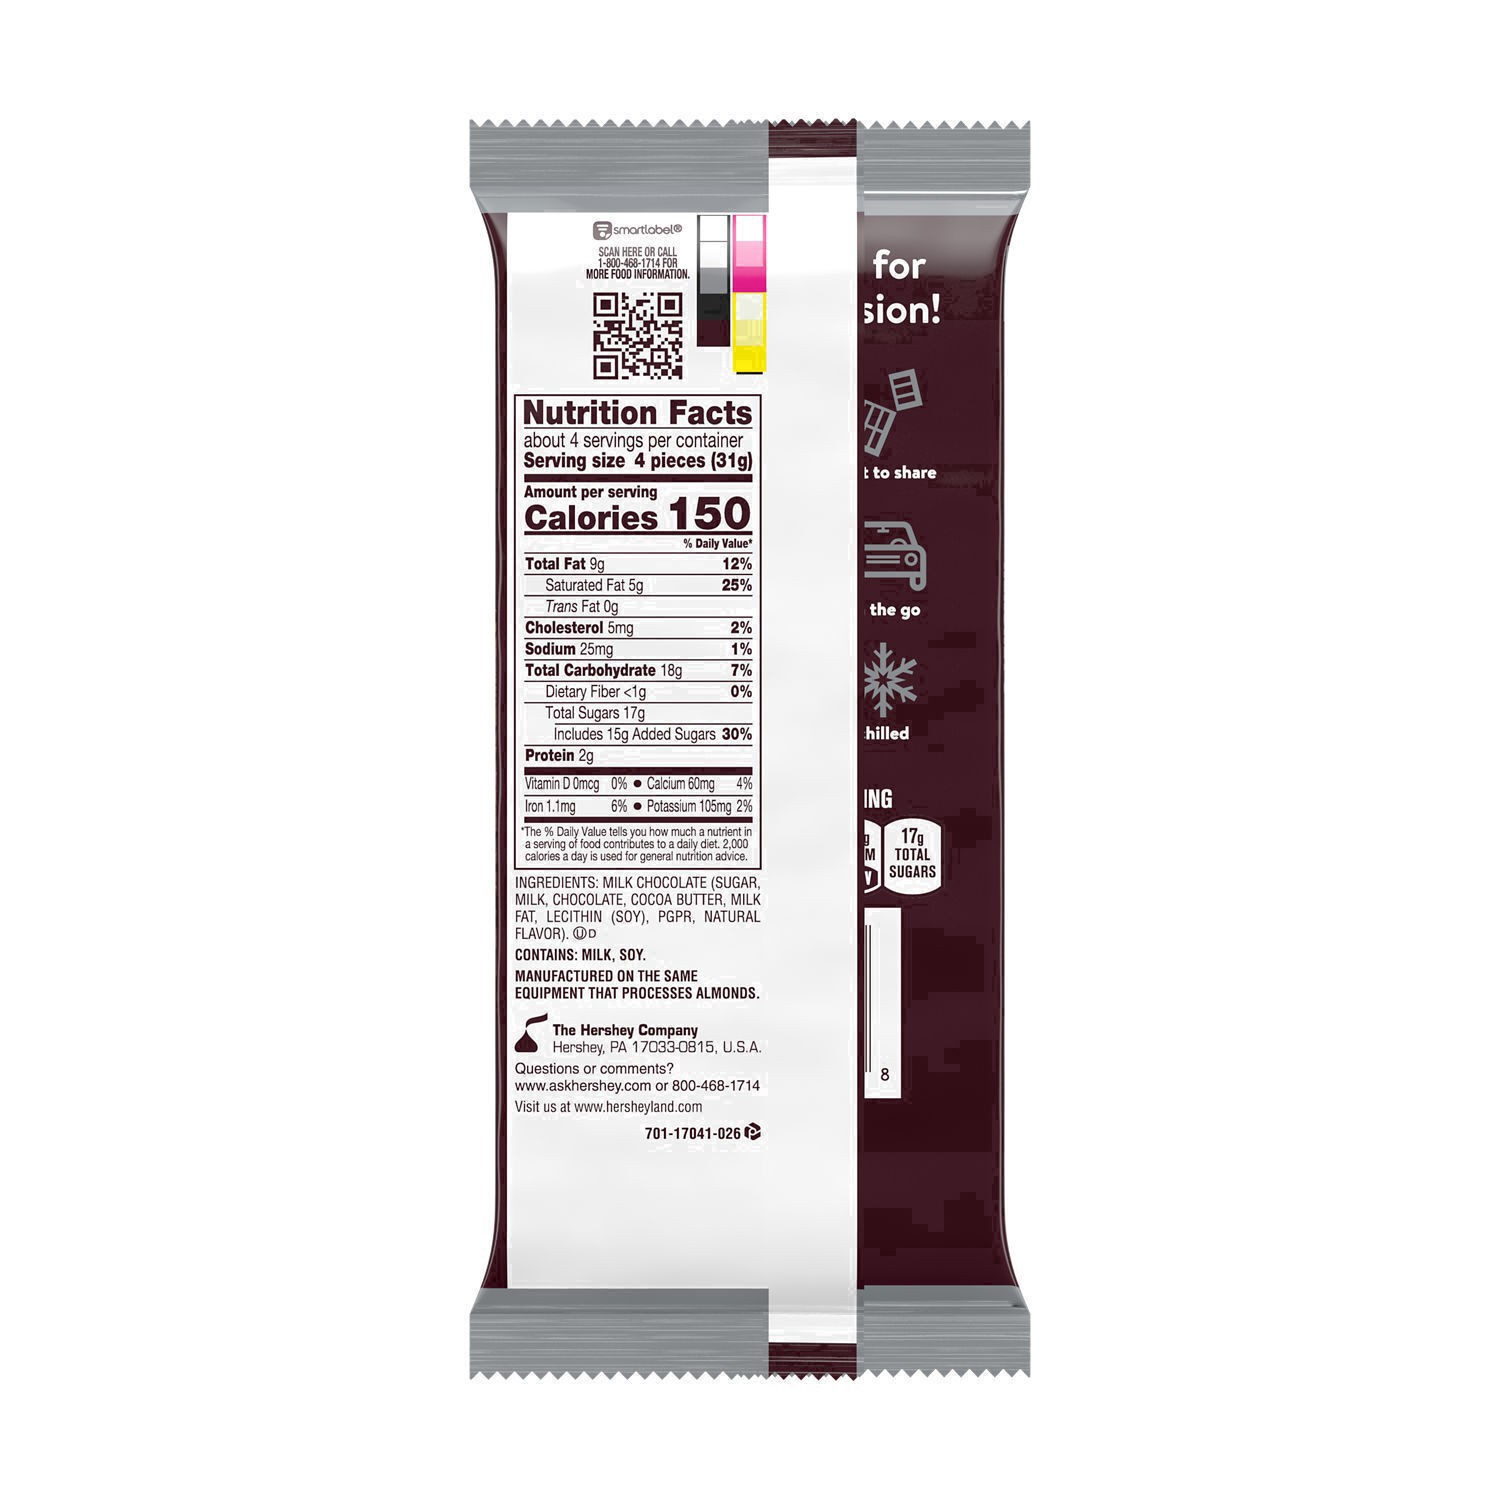 slide 50 of 68, Hershey's Milk Chocolate XL, Candy Bar, 4.4 oz (16 Pieces), 4.4 oz